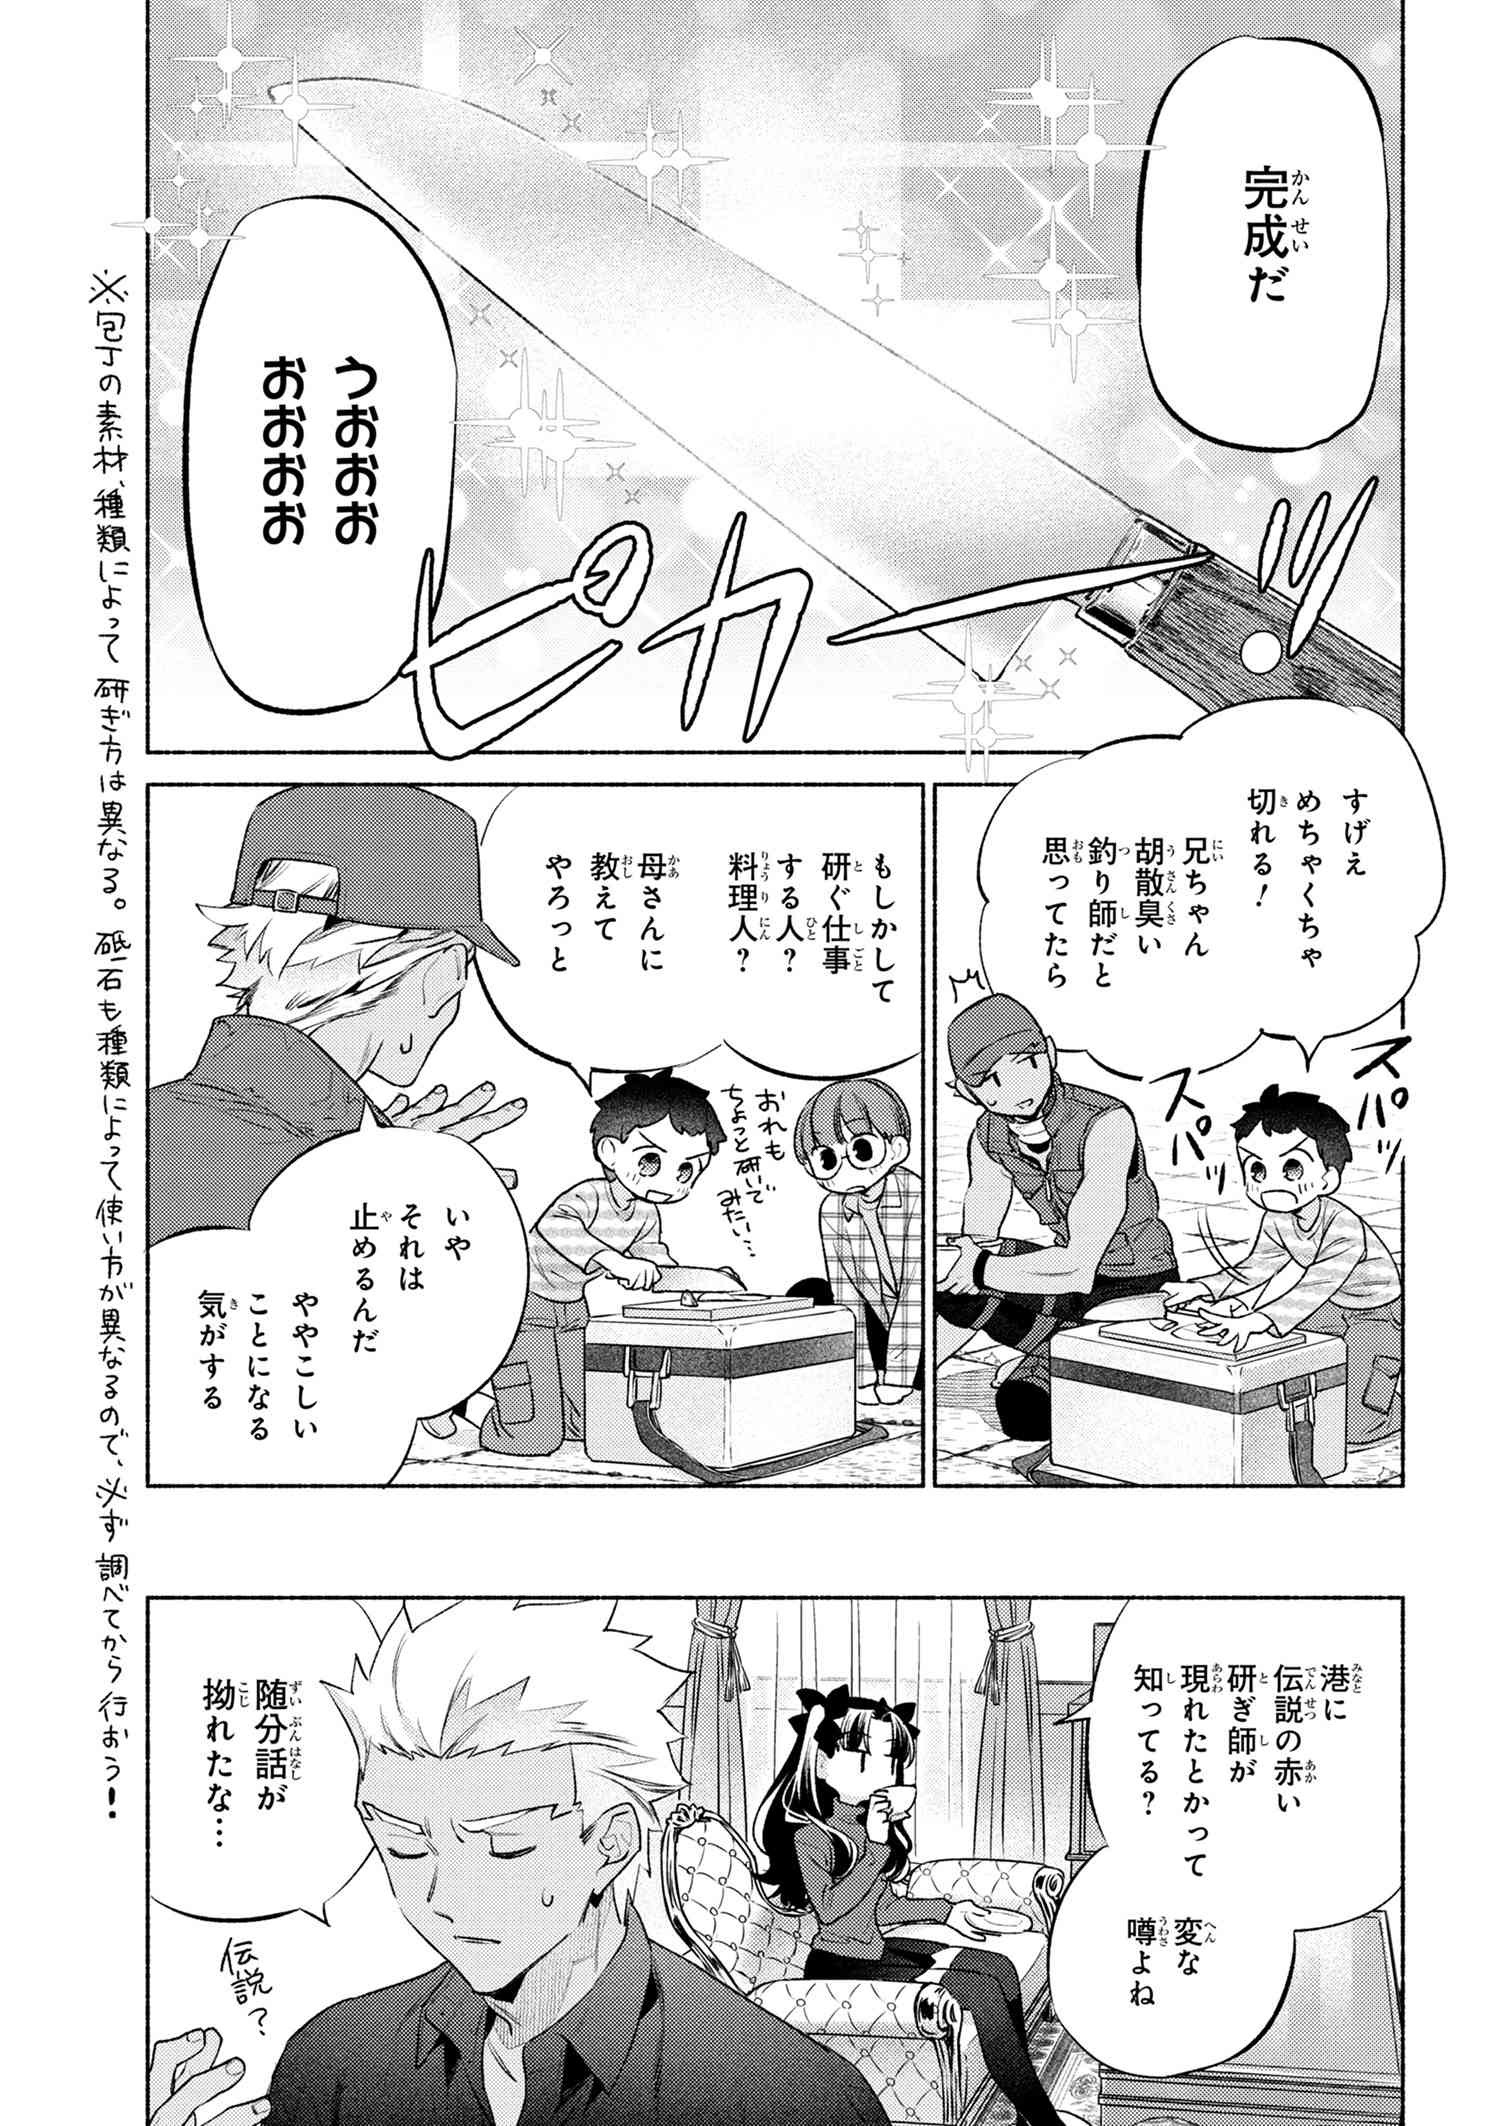 Emiya-san Chi no Kyou no Gohan - Chapter 55.6 - Page 13